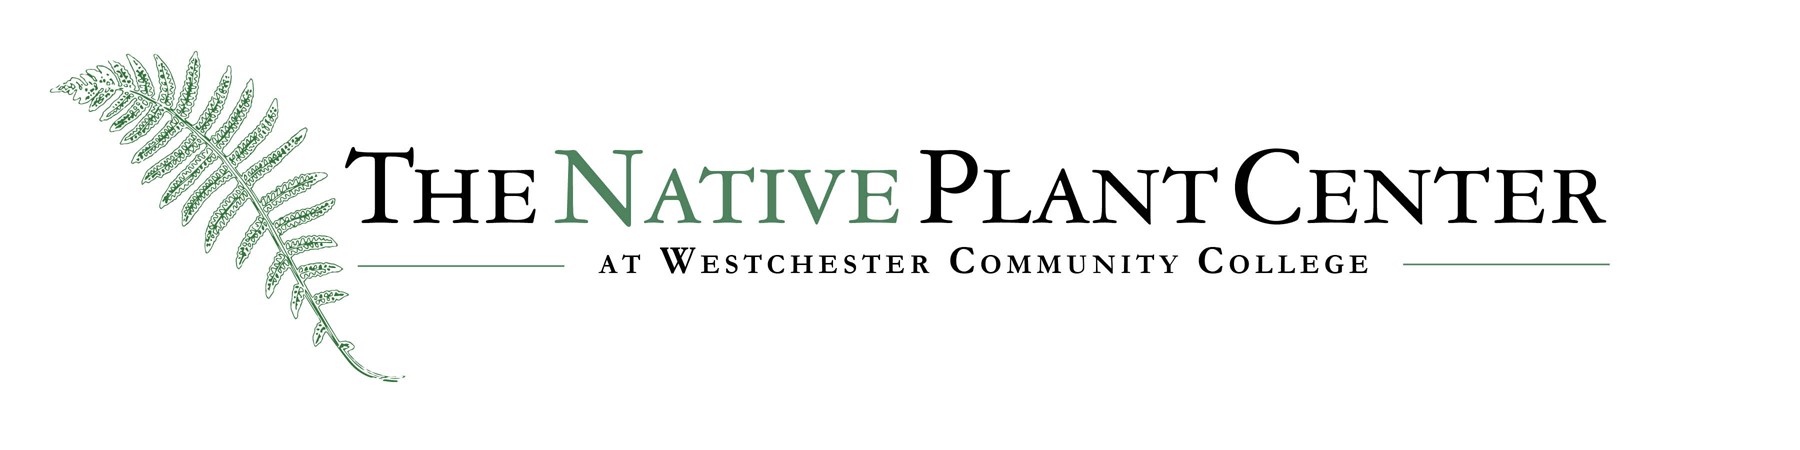 Native Plant Center Logo